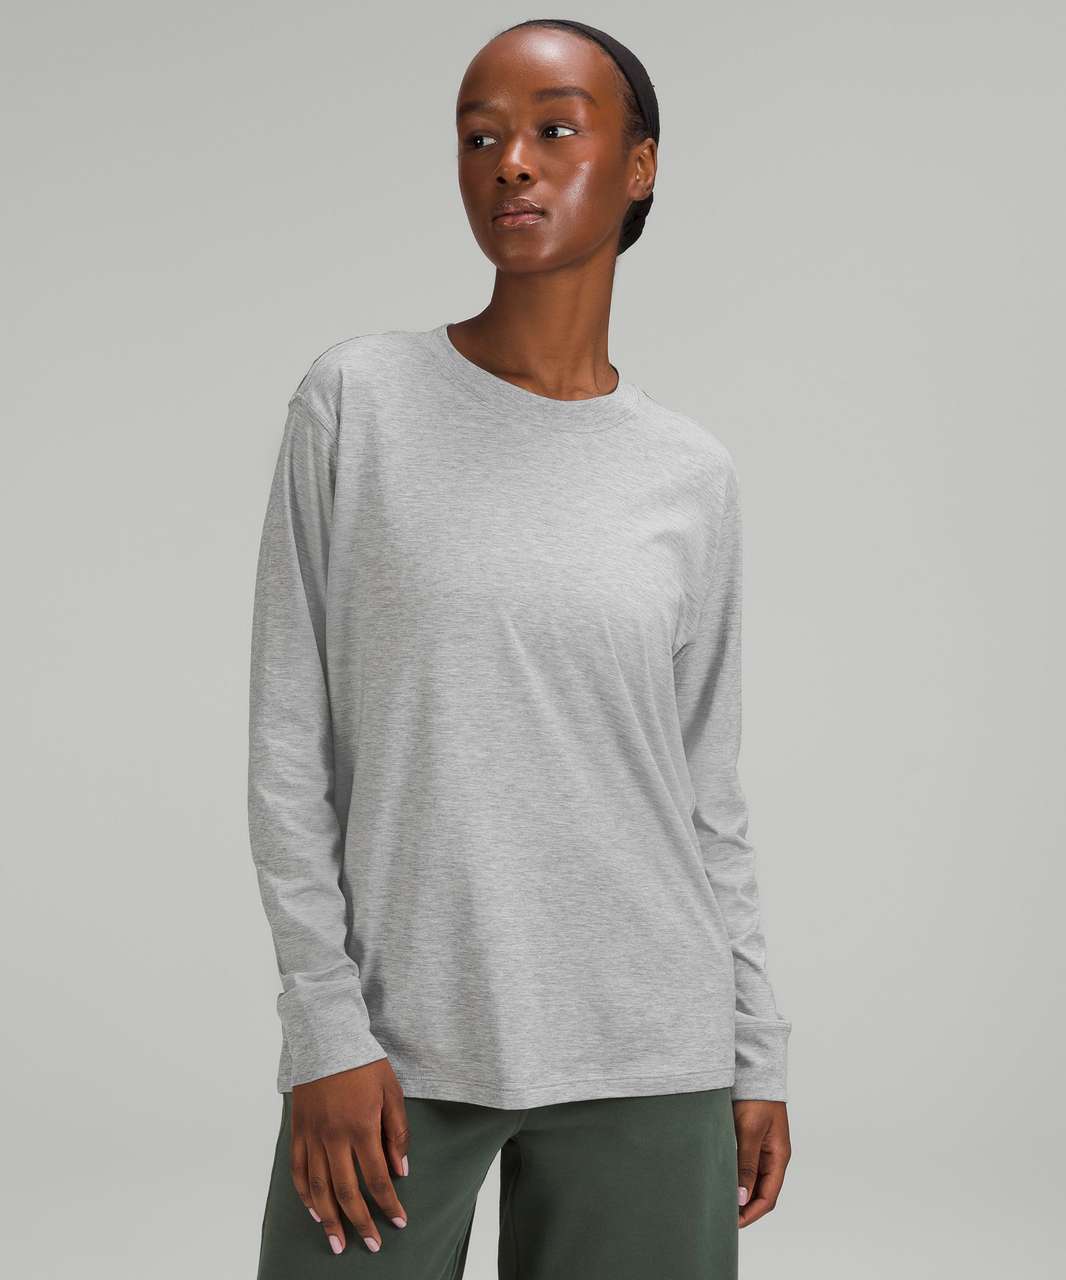 Lululemon All Yours Cotton Long Sleeve Shirt - Heathered Core Medium Grey